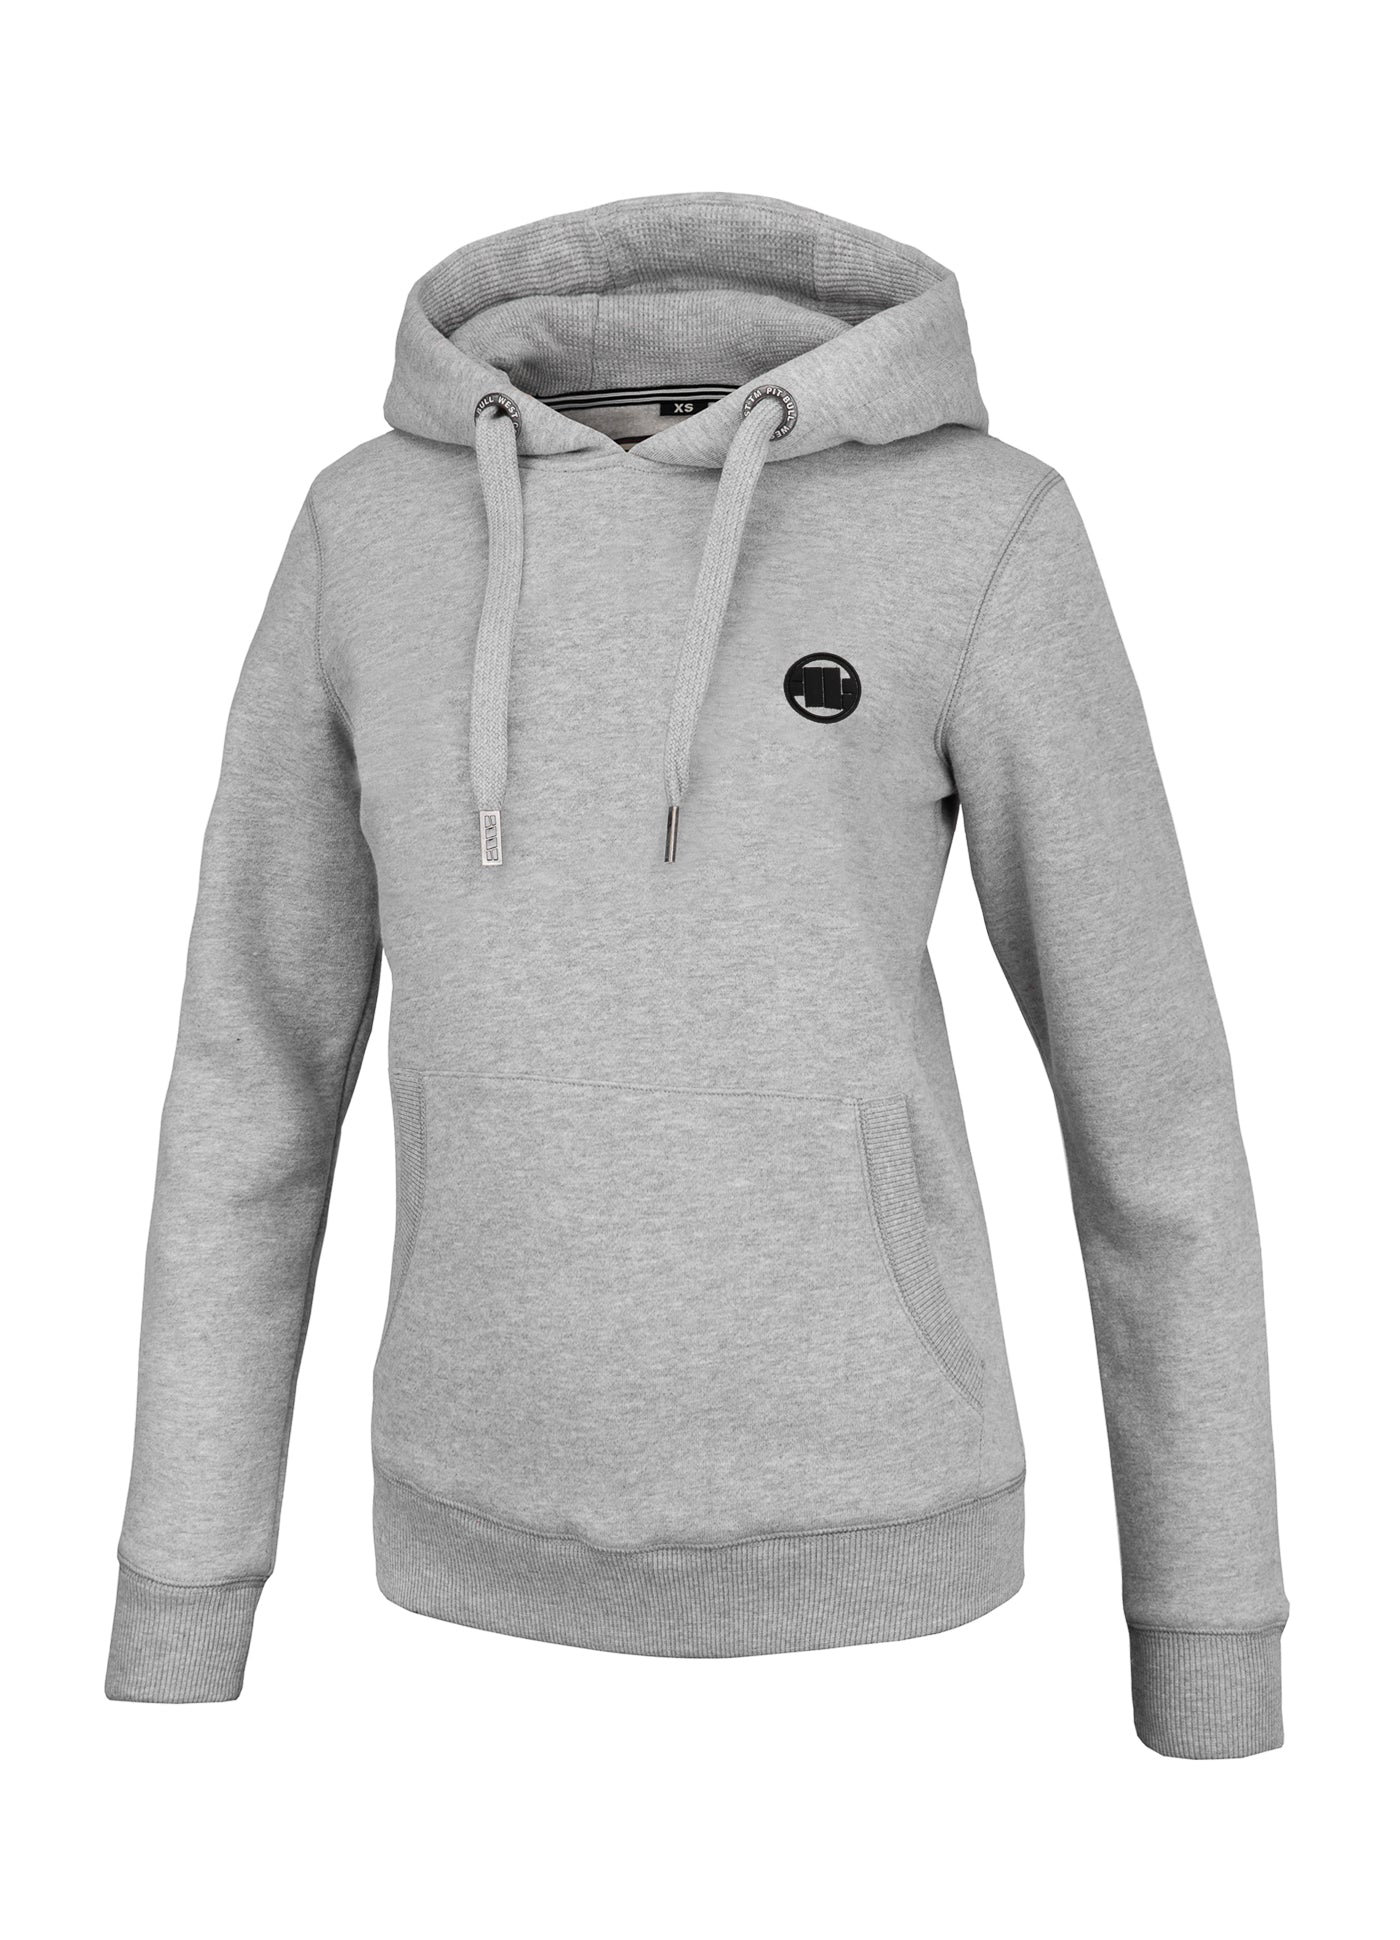 Women's hoodie SMALL LOGO Grey